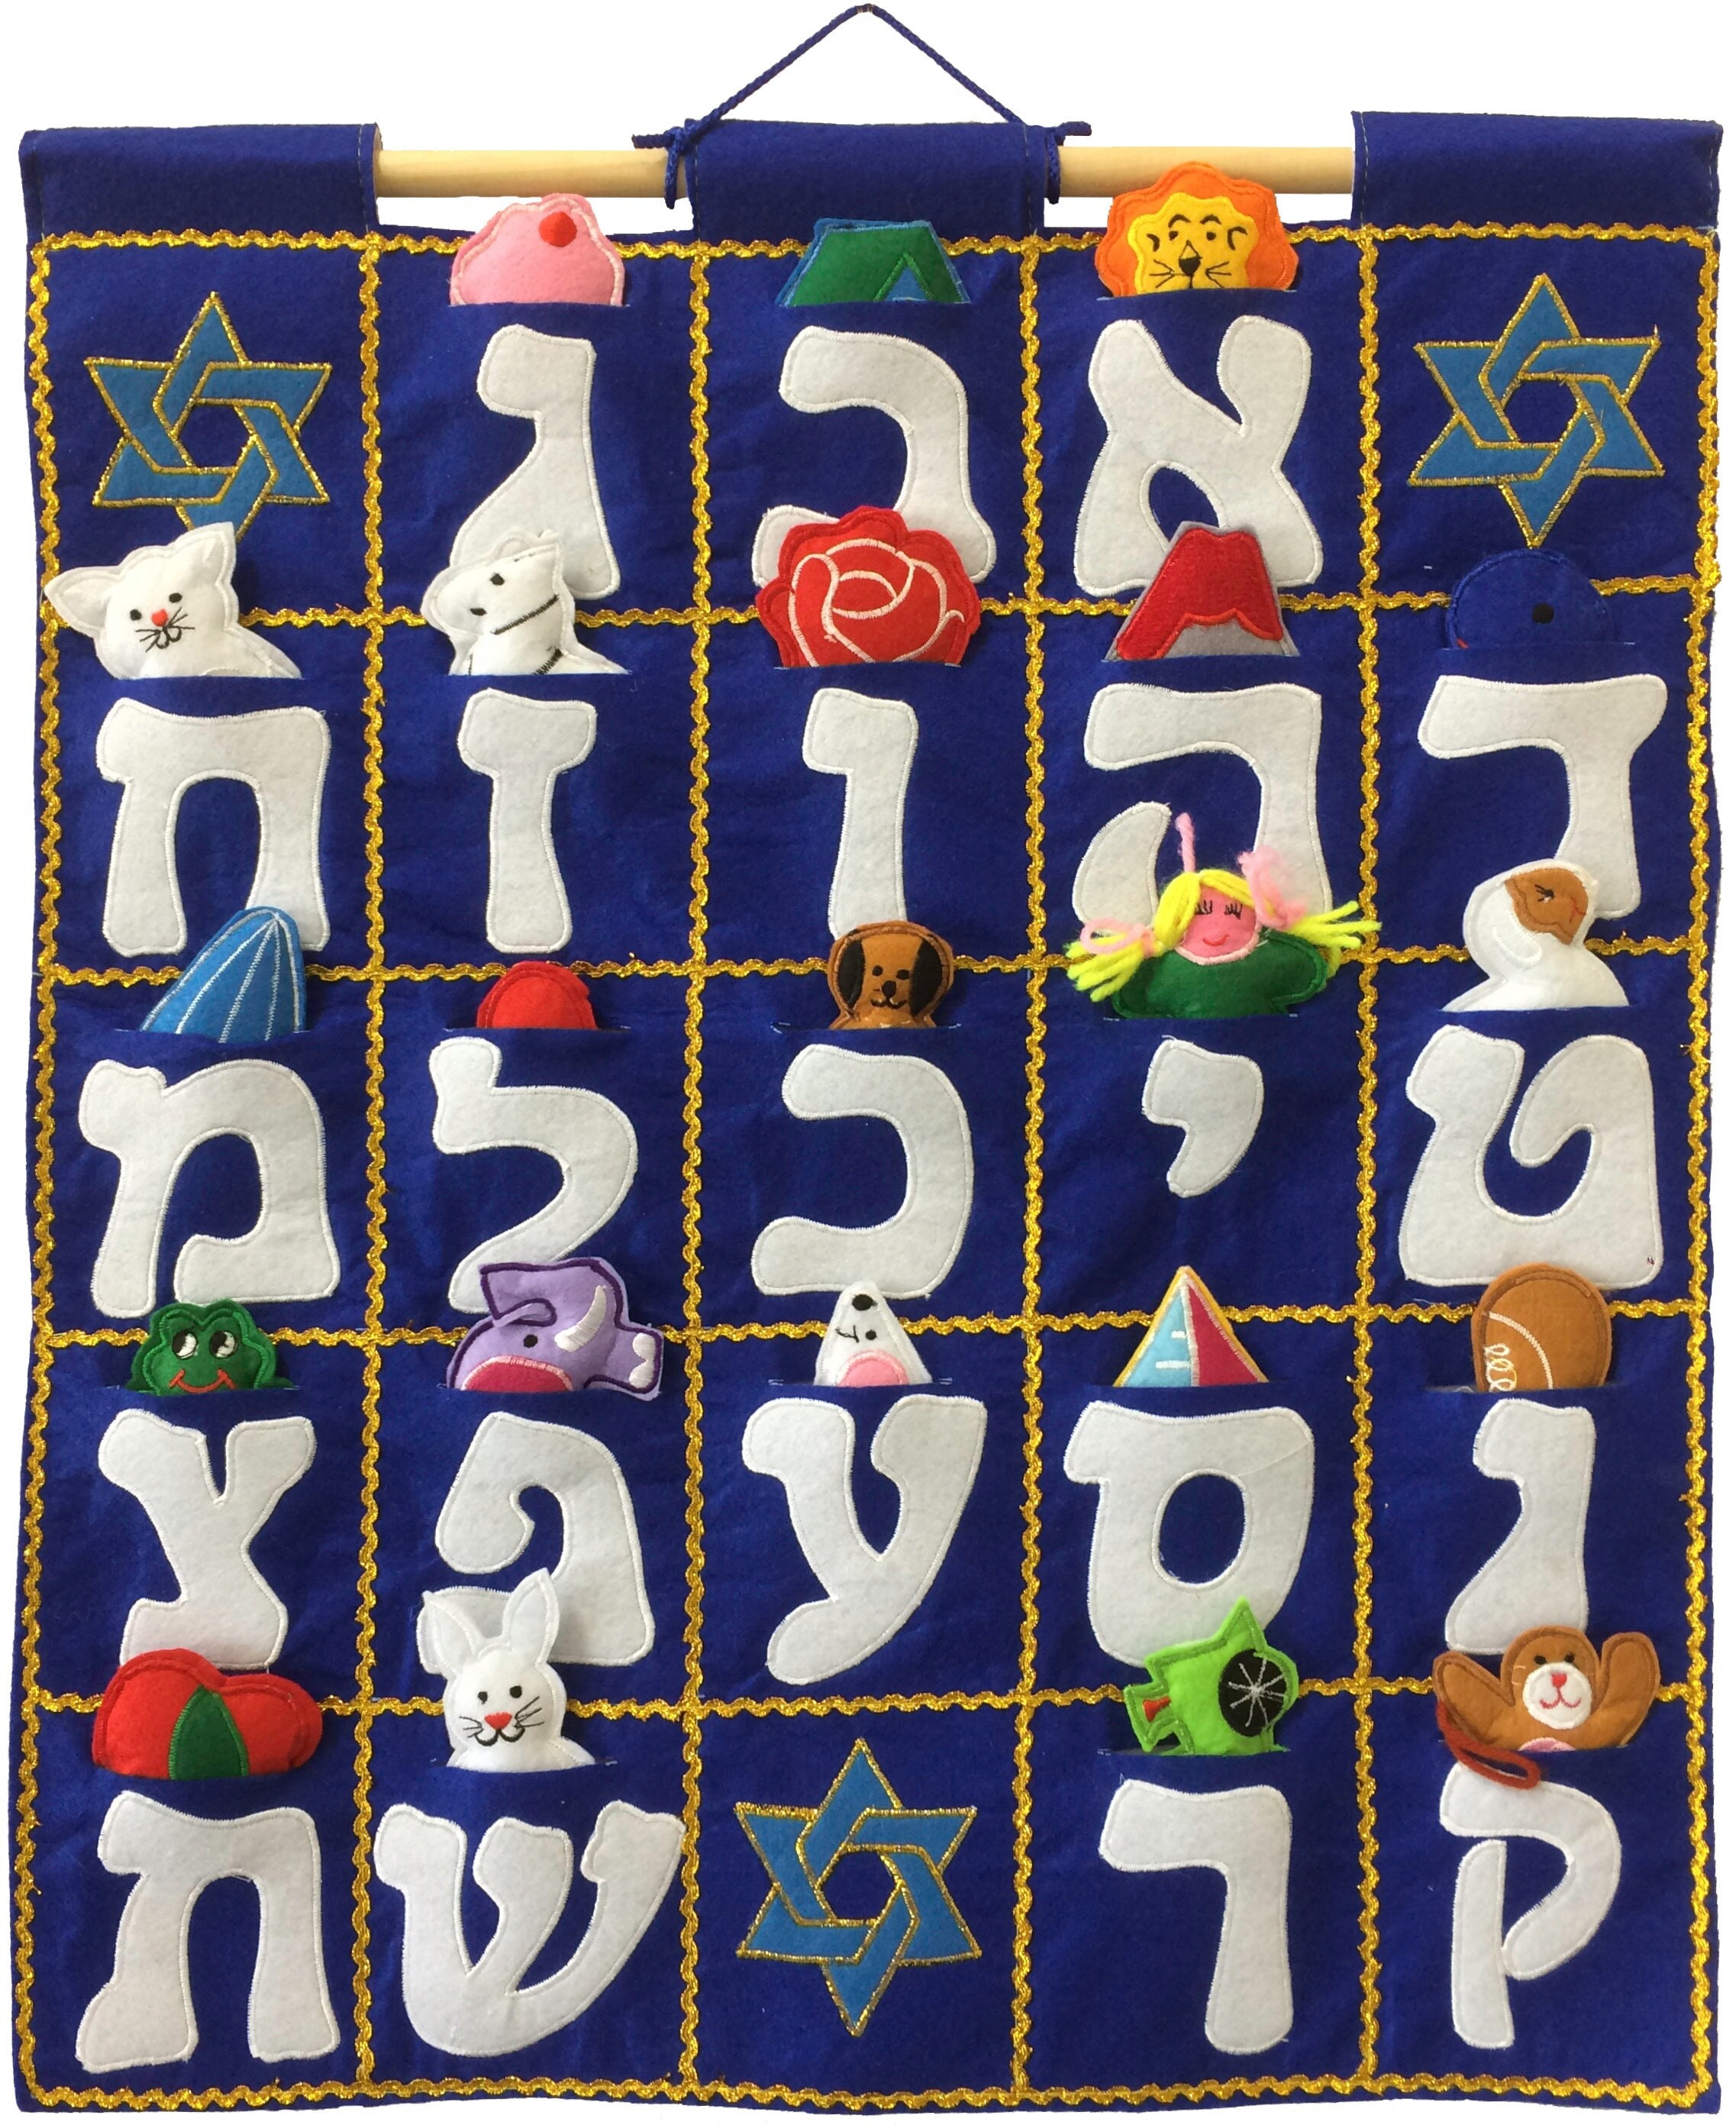 Aleph Bet Felt Stickers